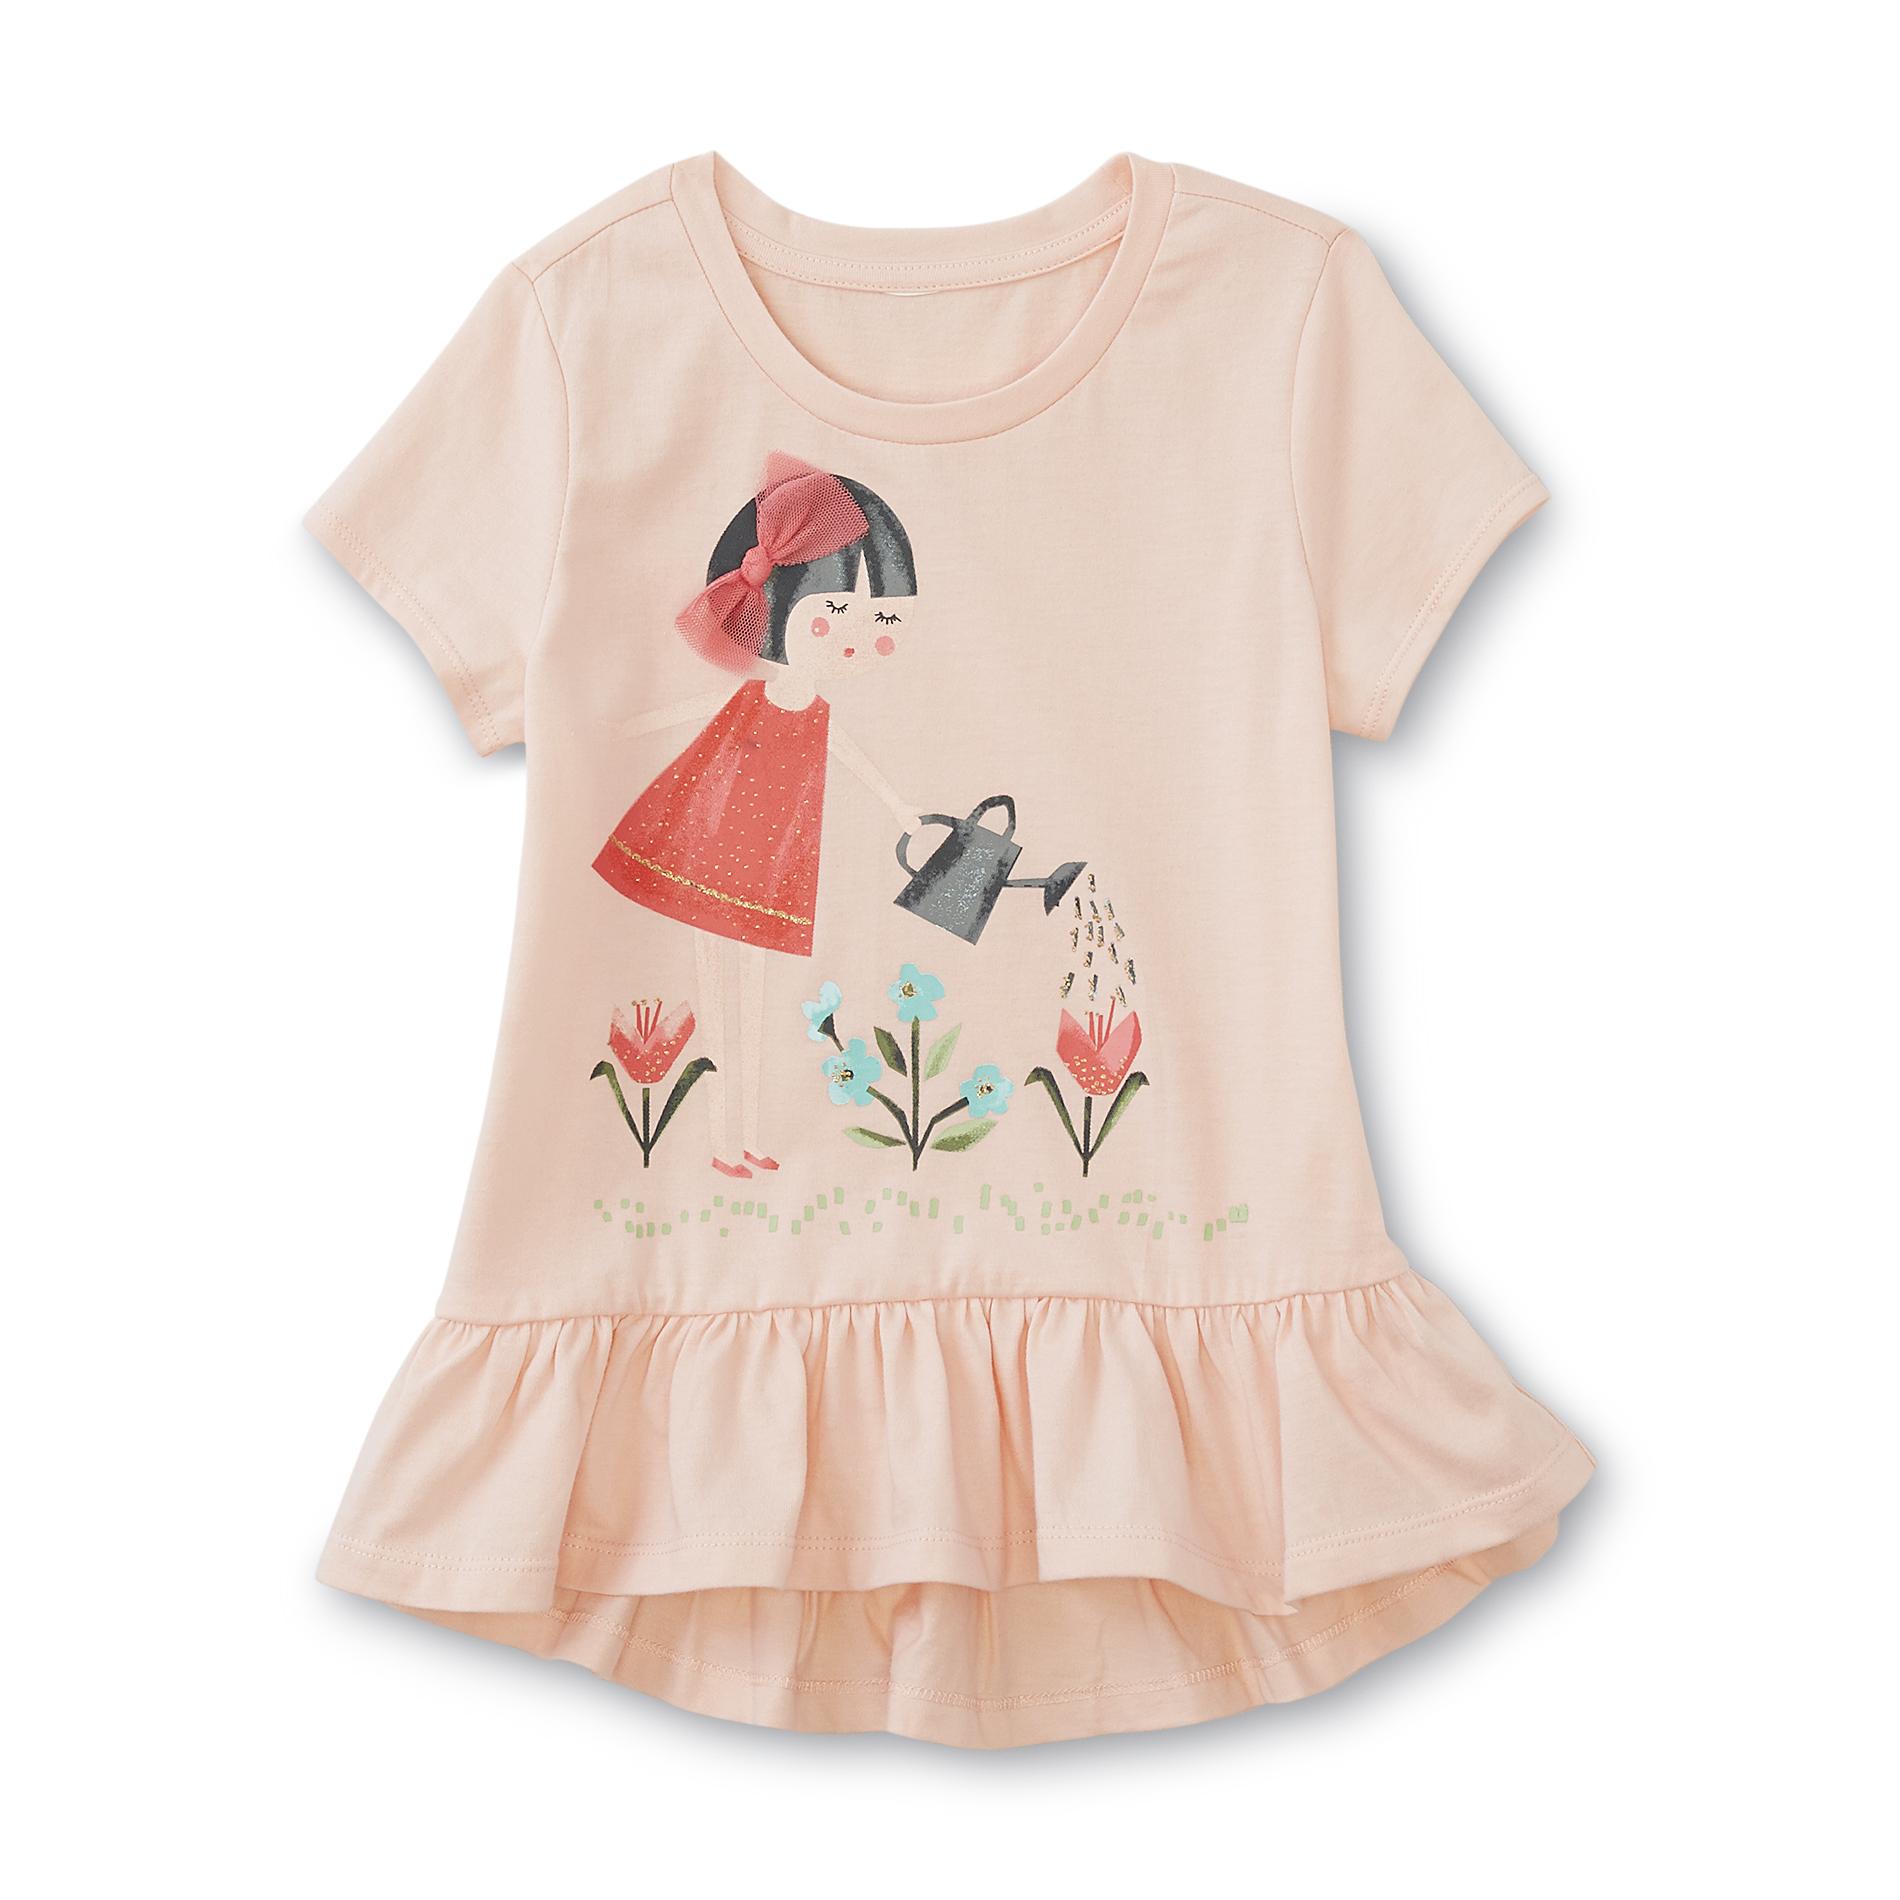 Toughskins Infant & Toddler Girl's Peplum Top - Garden